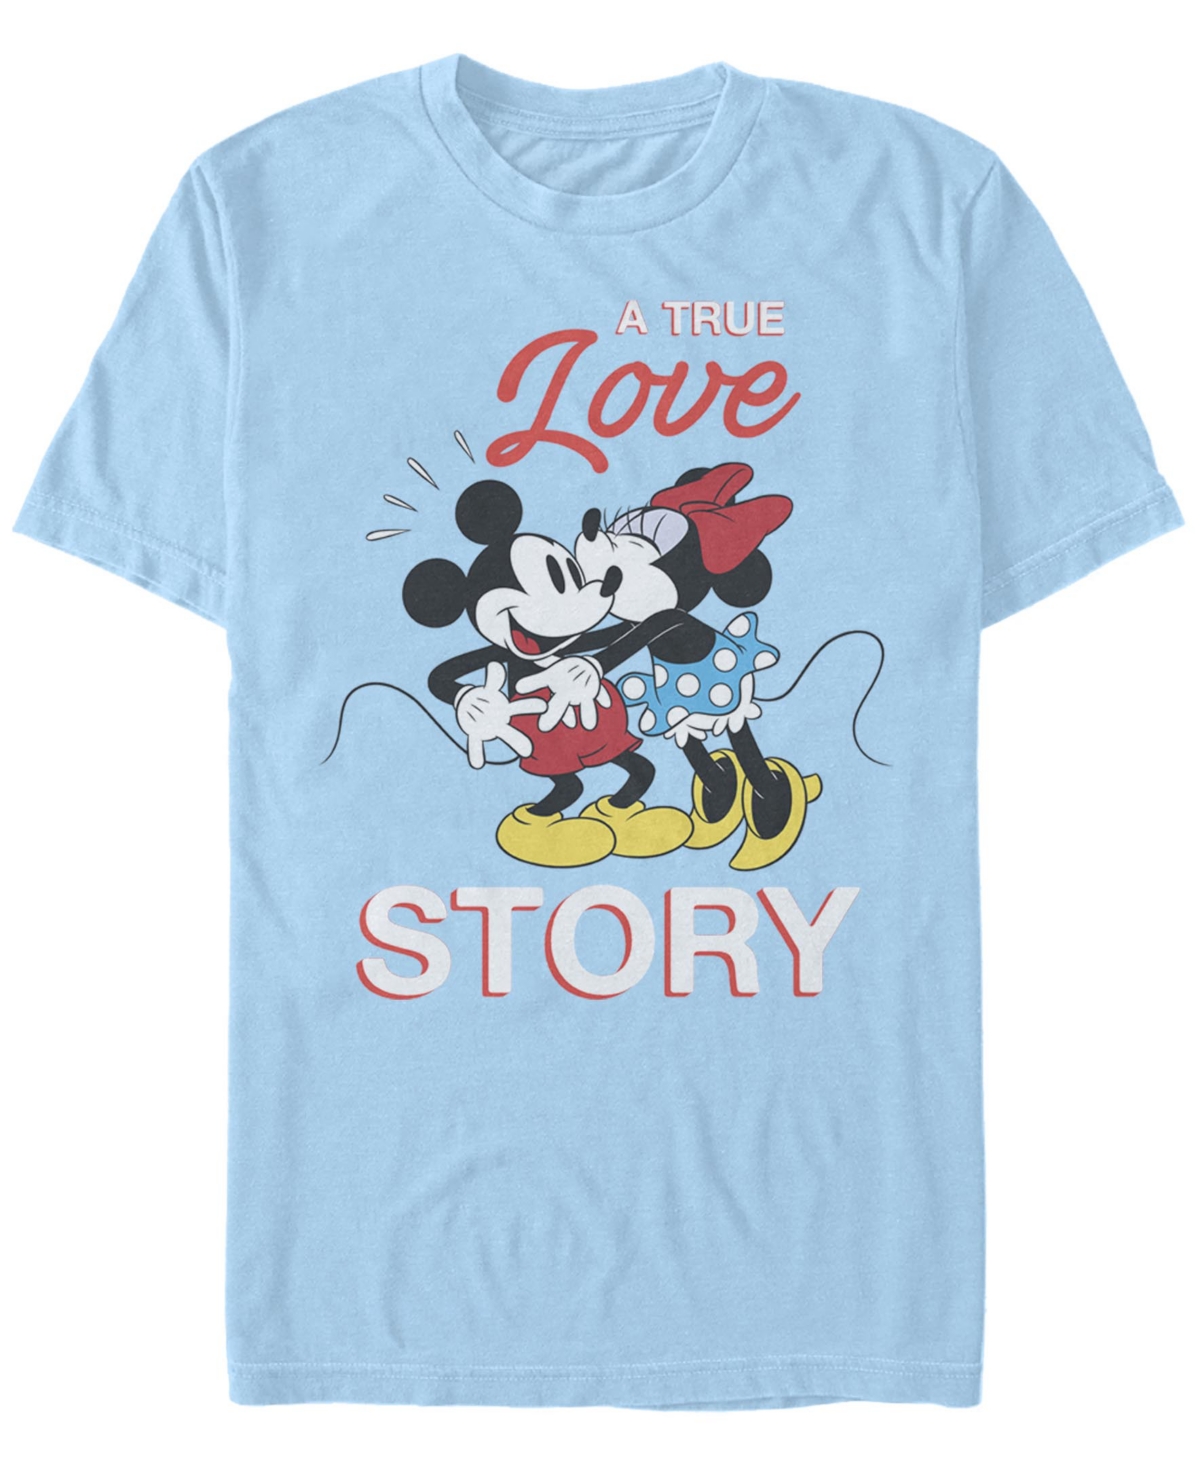 Men's True Love Story Short Sleeve Crew T-shirt - Light Blue